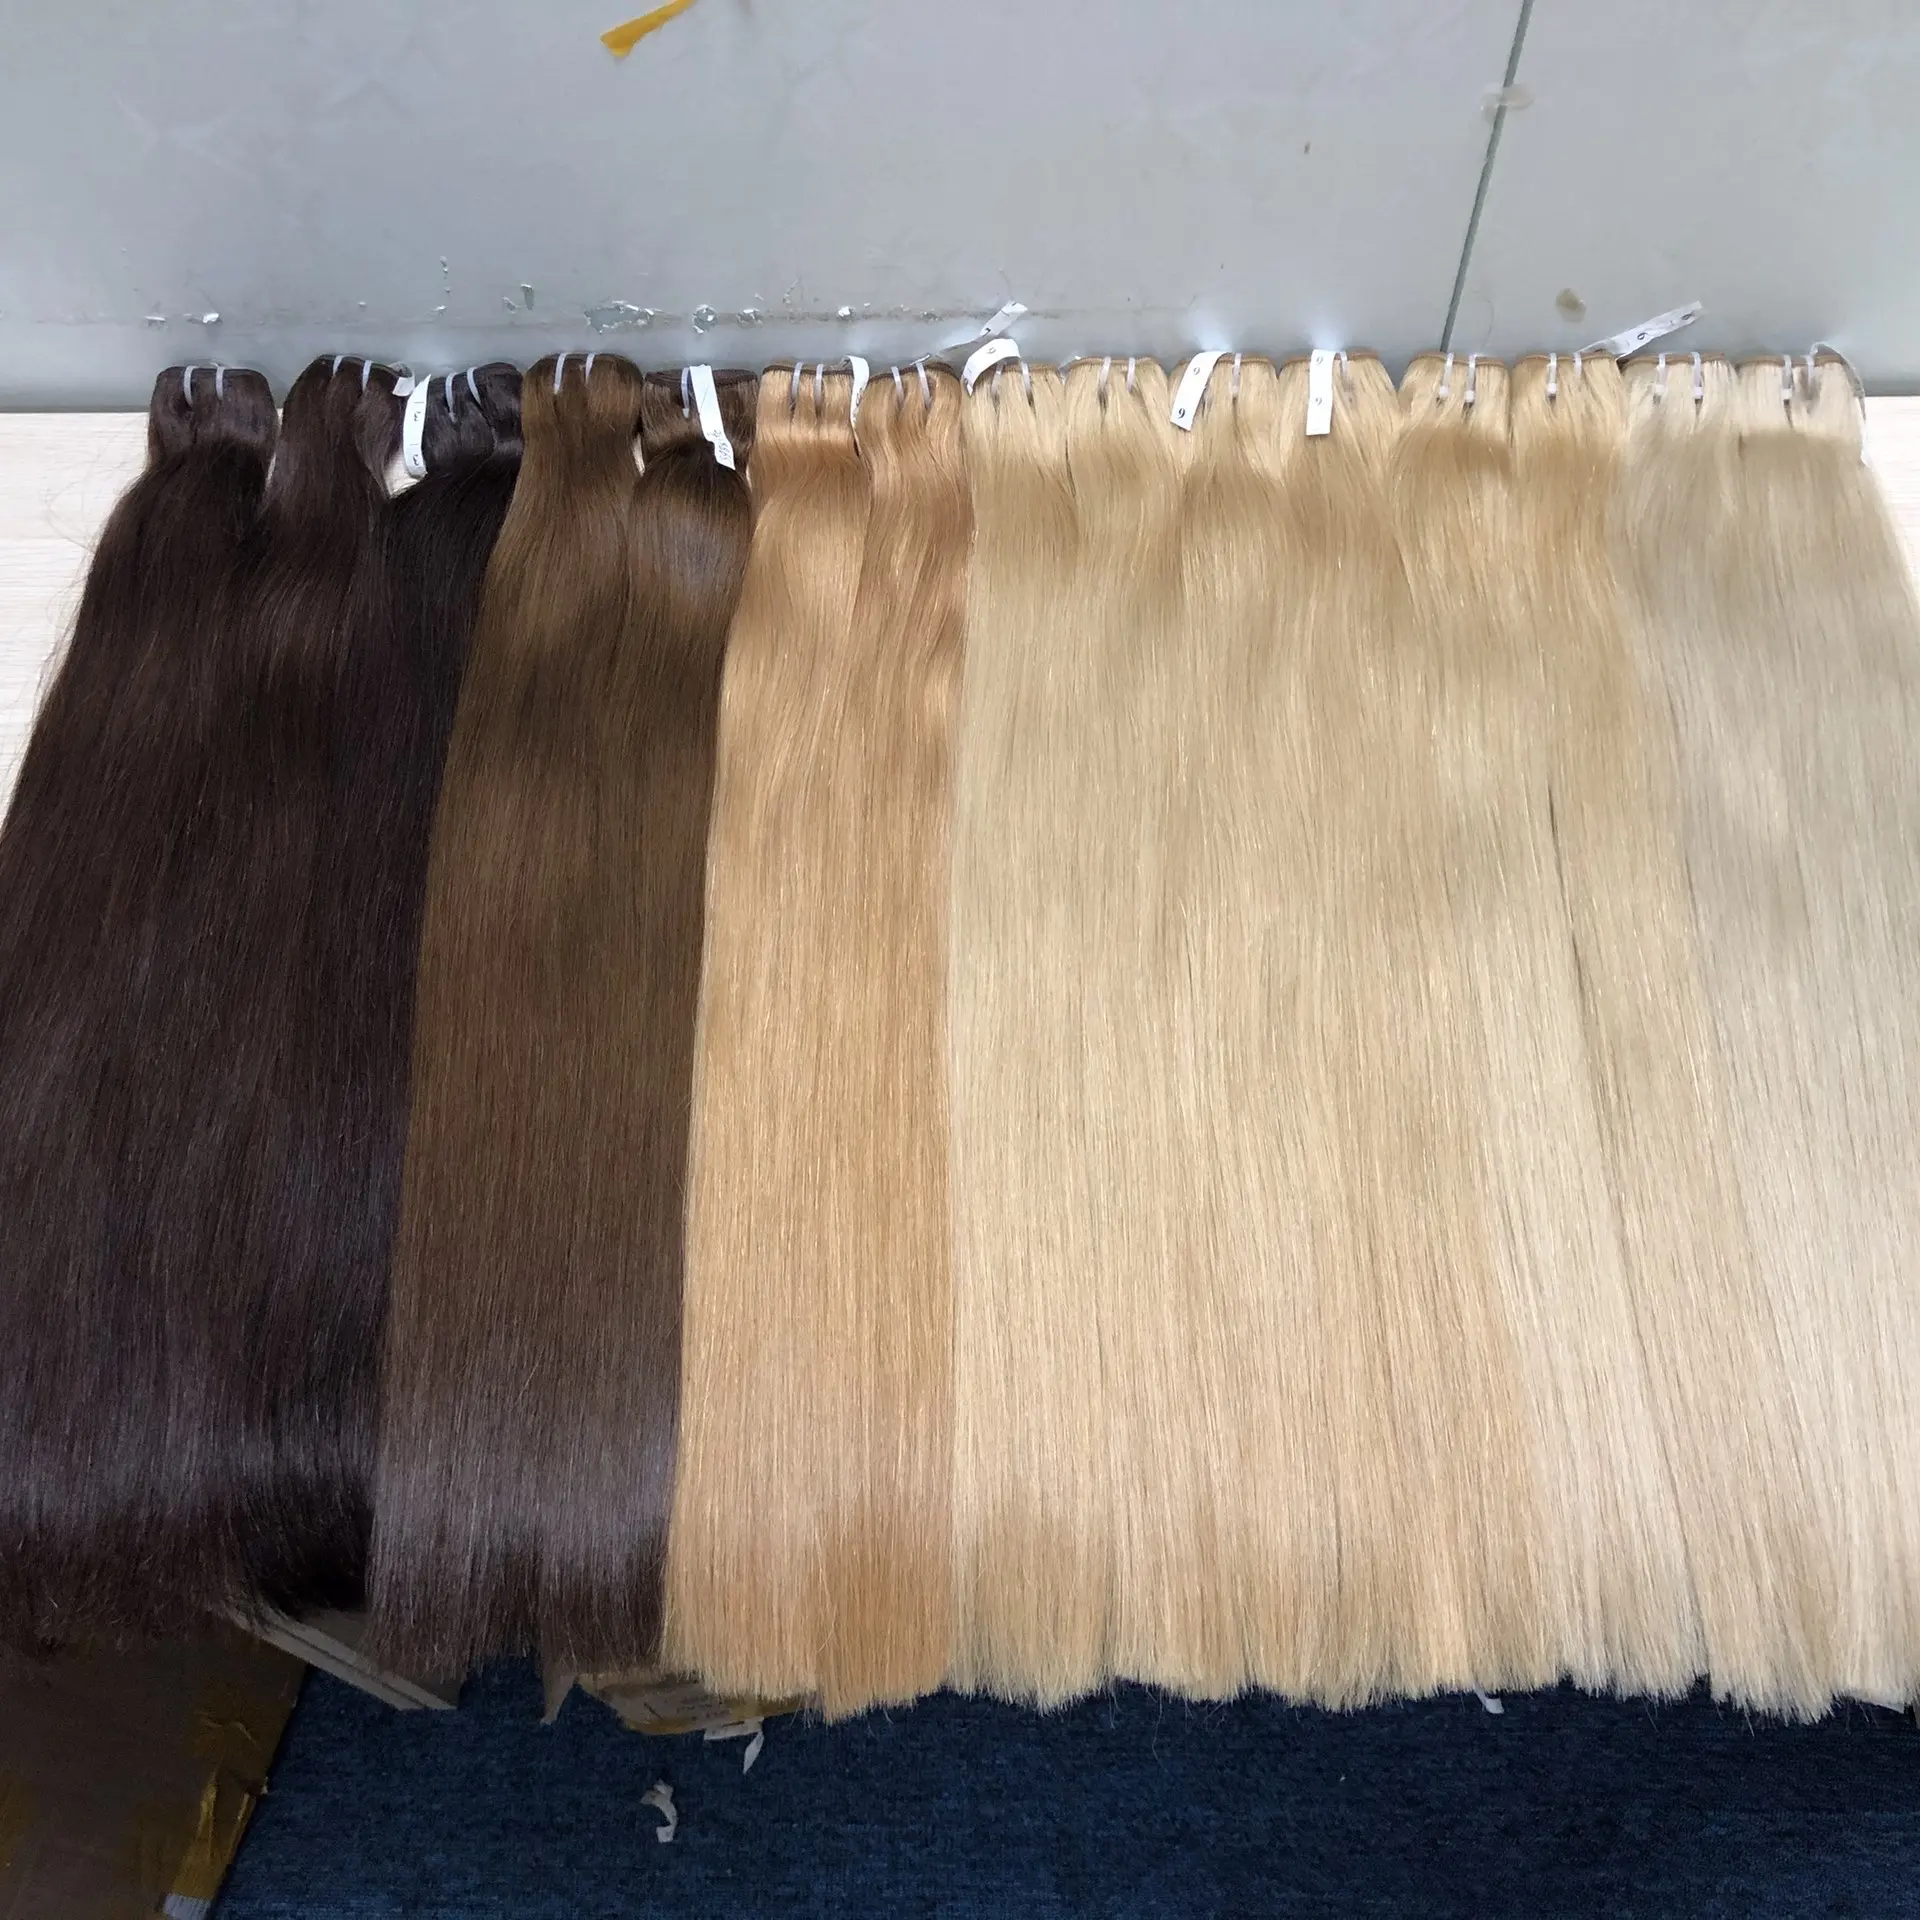 Hot sale Wholesale colors hair- 100% virgin human hair color hair weft hair extensions 1b, brown, blonde straight bundles hair